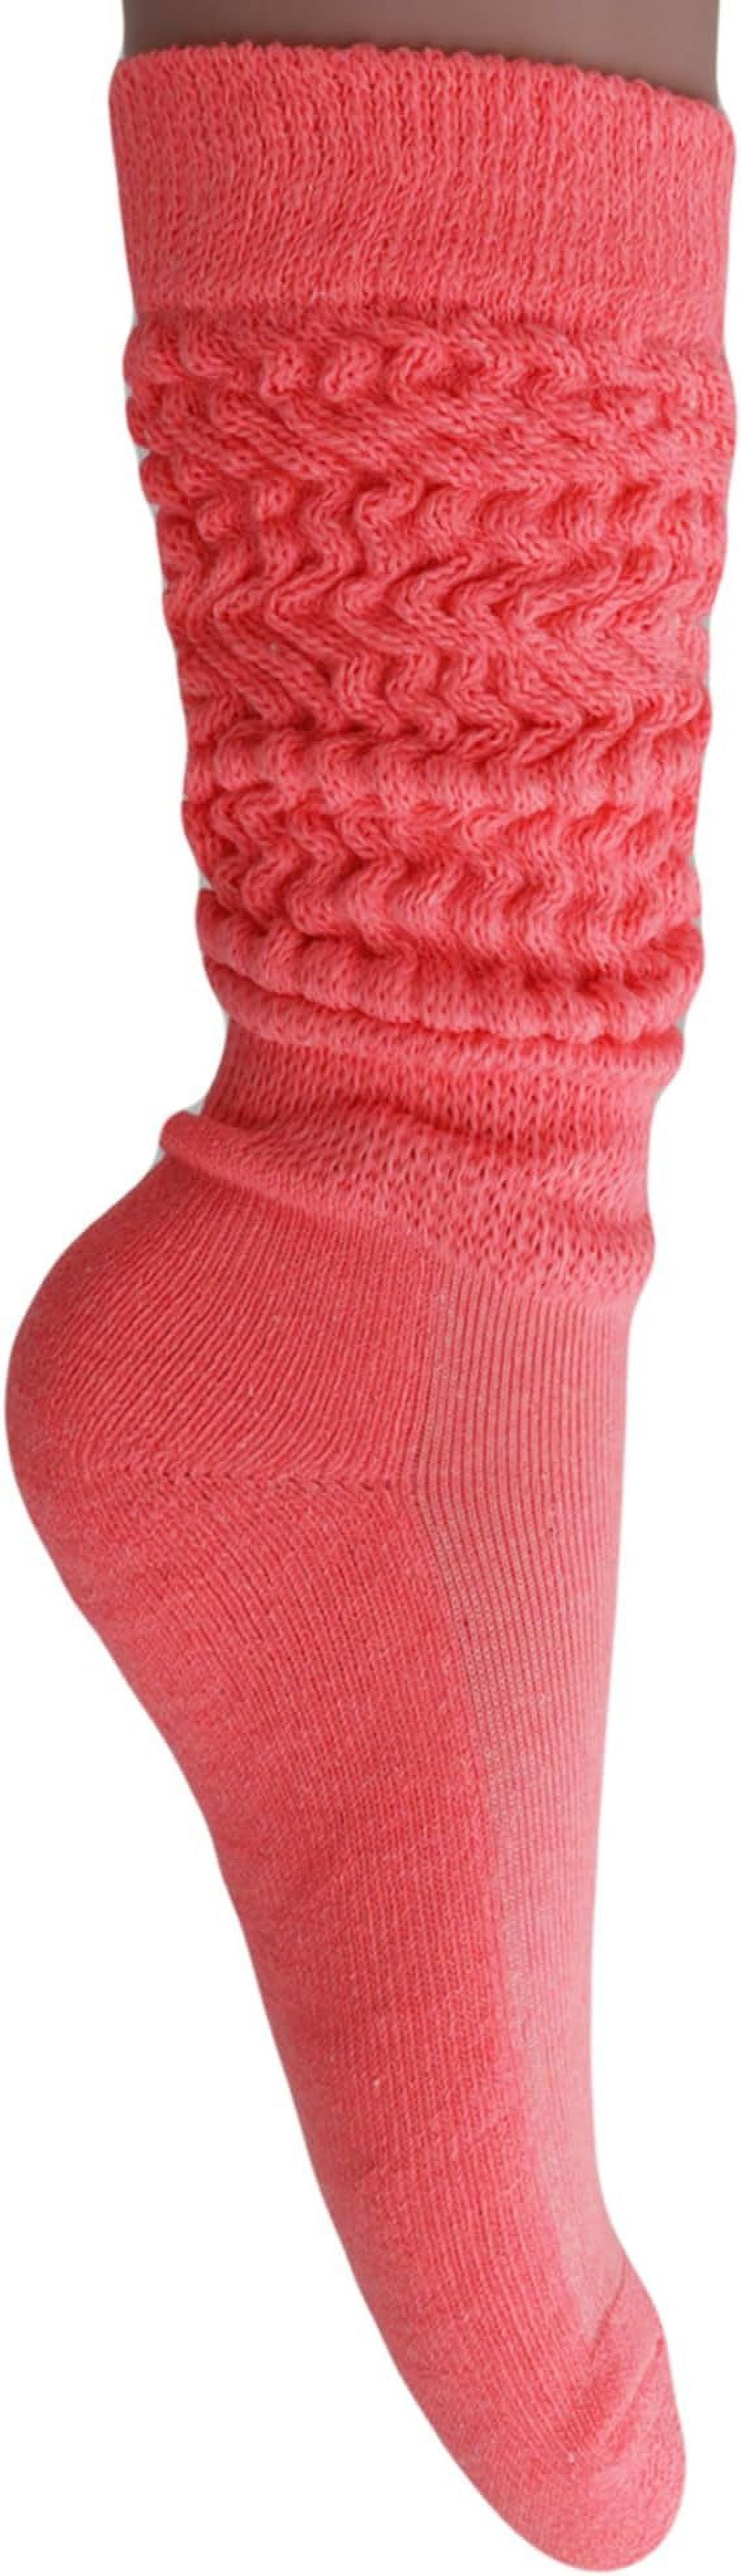 3 Pairs Women's Heavy Slouch Socks Shoe Size 5-10 (Red)